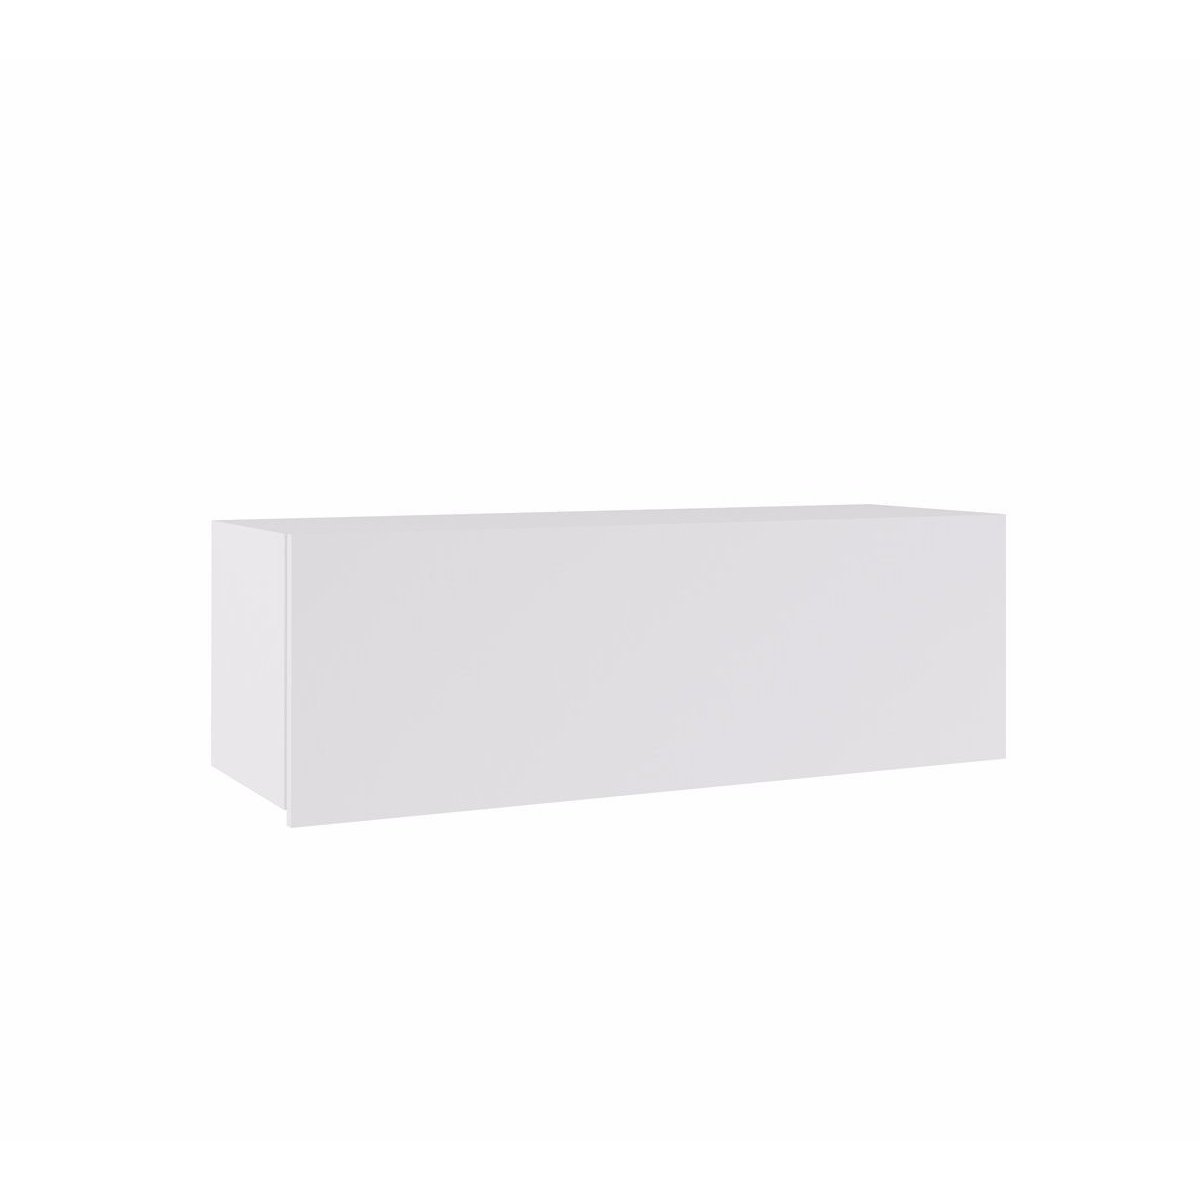 Calabrini Wall Cabinet in White Gloss 105cm - White Gloss 105cm